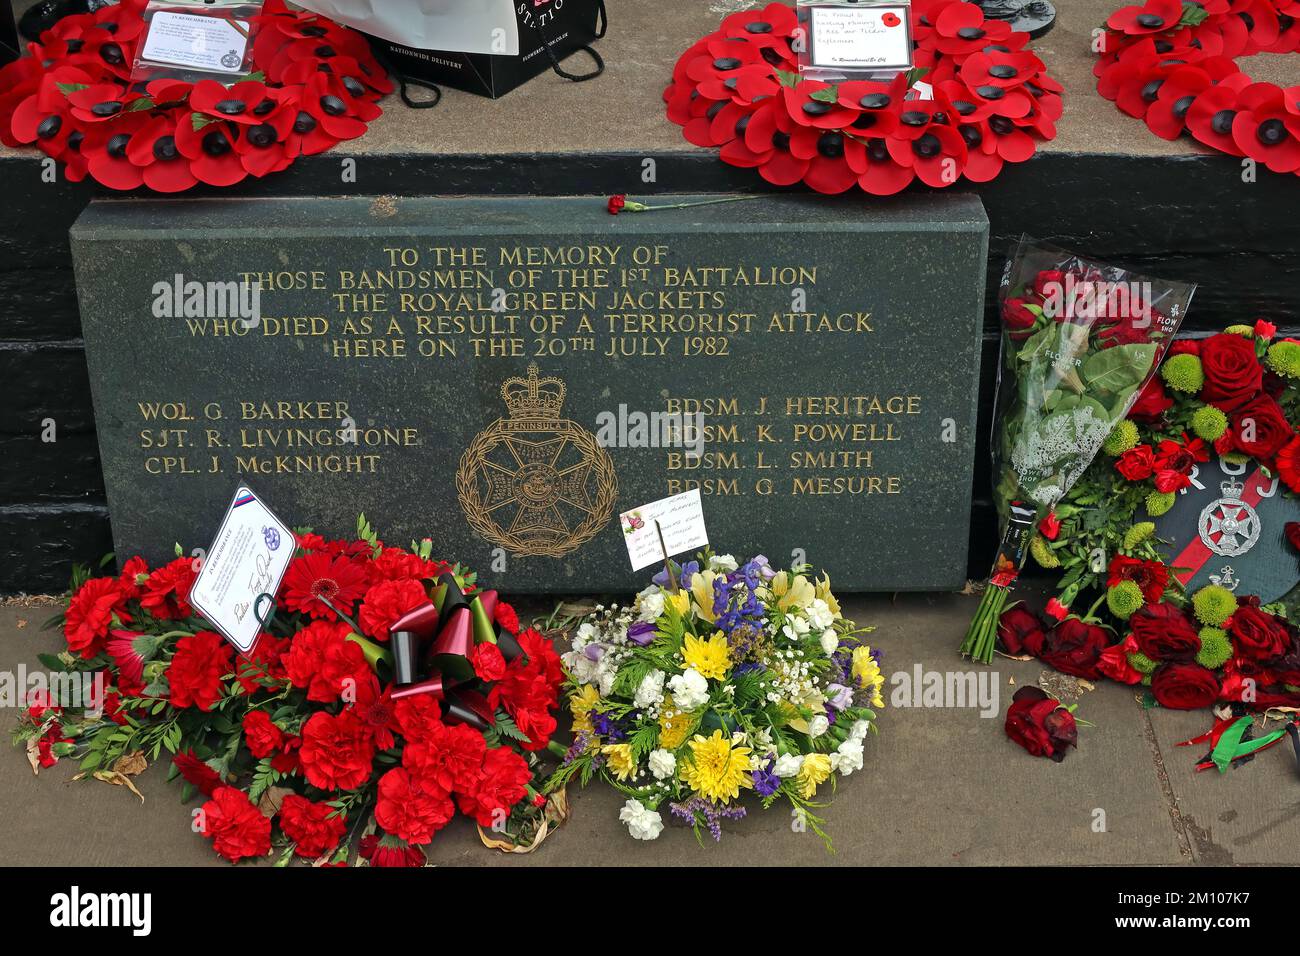 Memorial to Regents Park, bandstand IRA bombing 20jul1982, London, England, UK - Holme Green Stock Photo